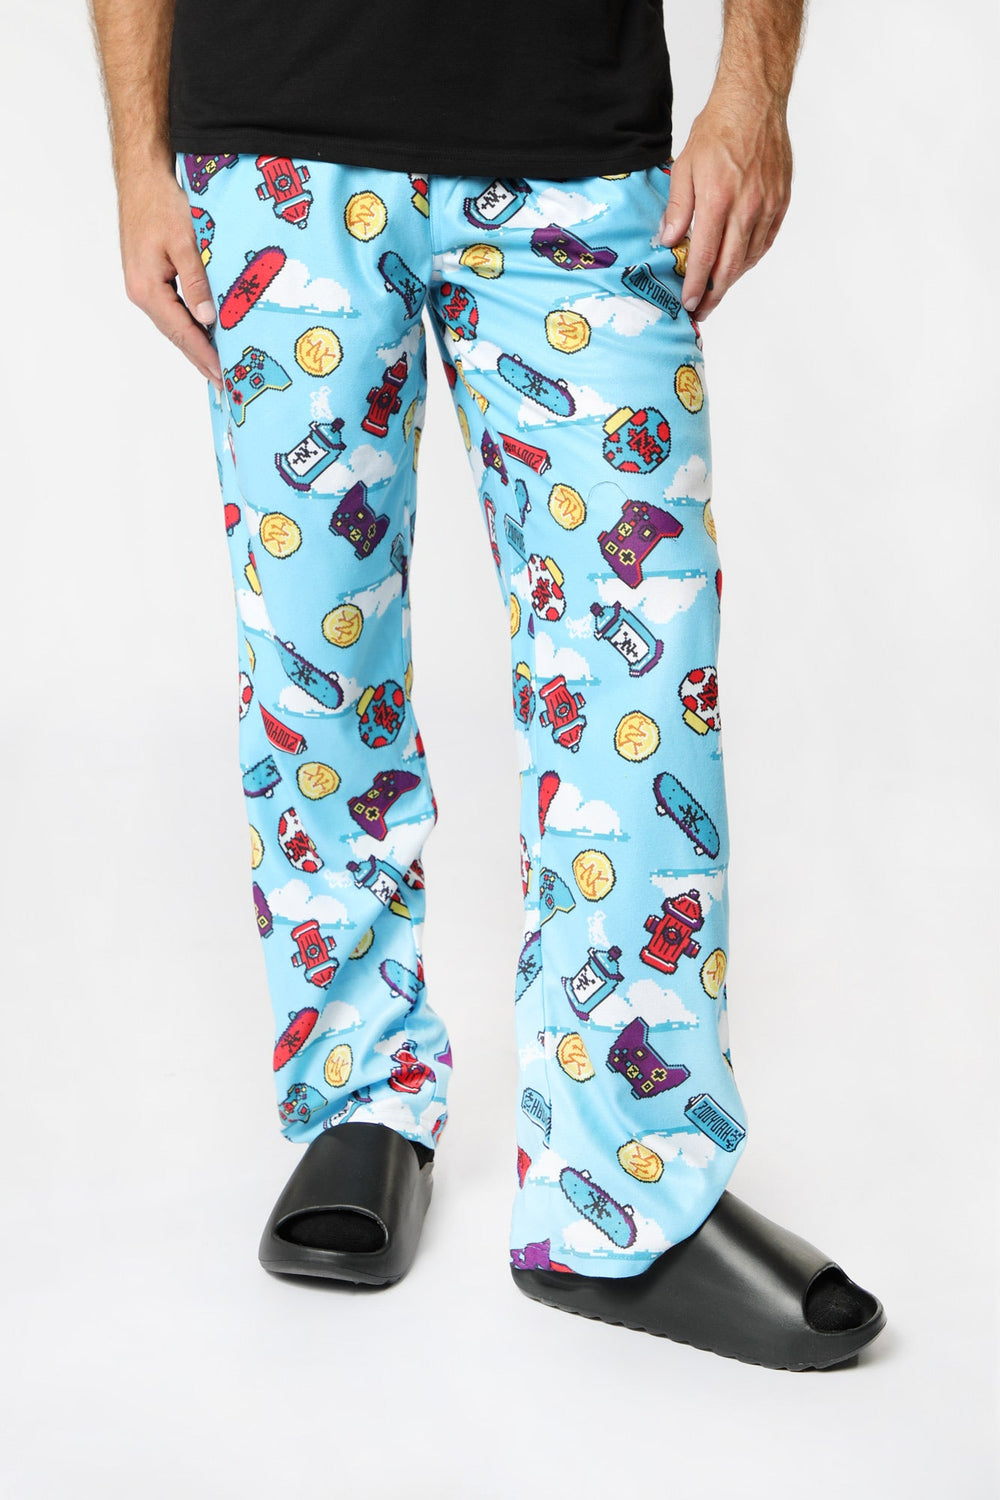 Bas de Pyjama Imprimé Gamer Zoo York Homme Bleu pale